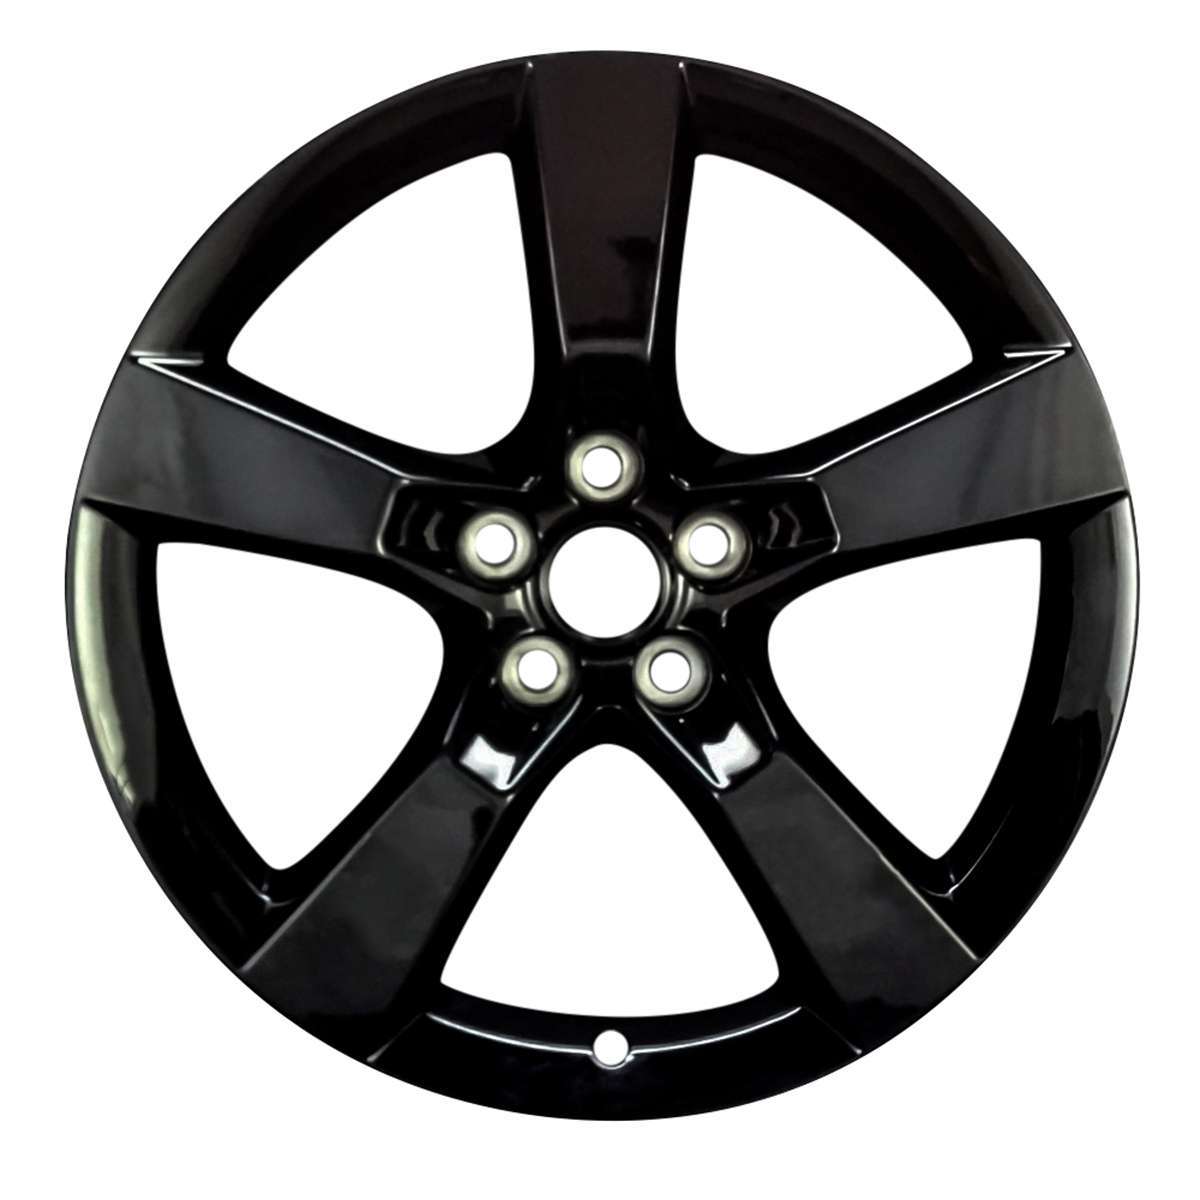 2012 Chevrolet Camaro 20" Front OEM Wheel Rim W5444GB